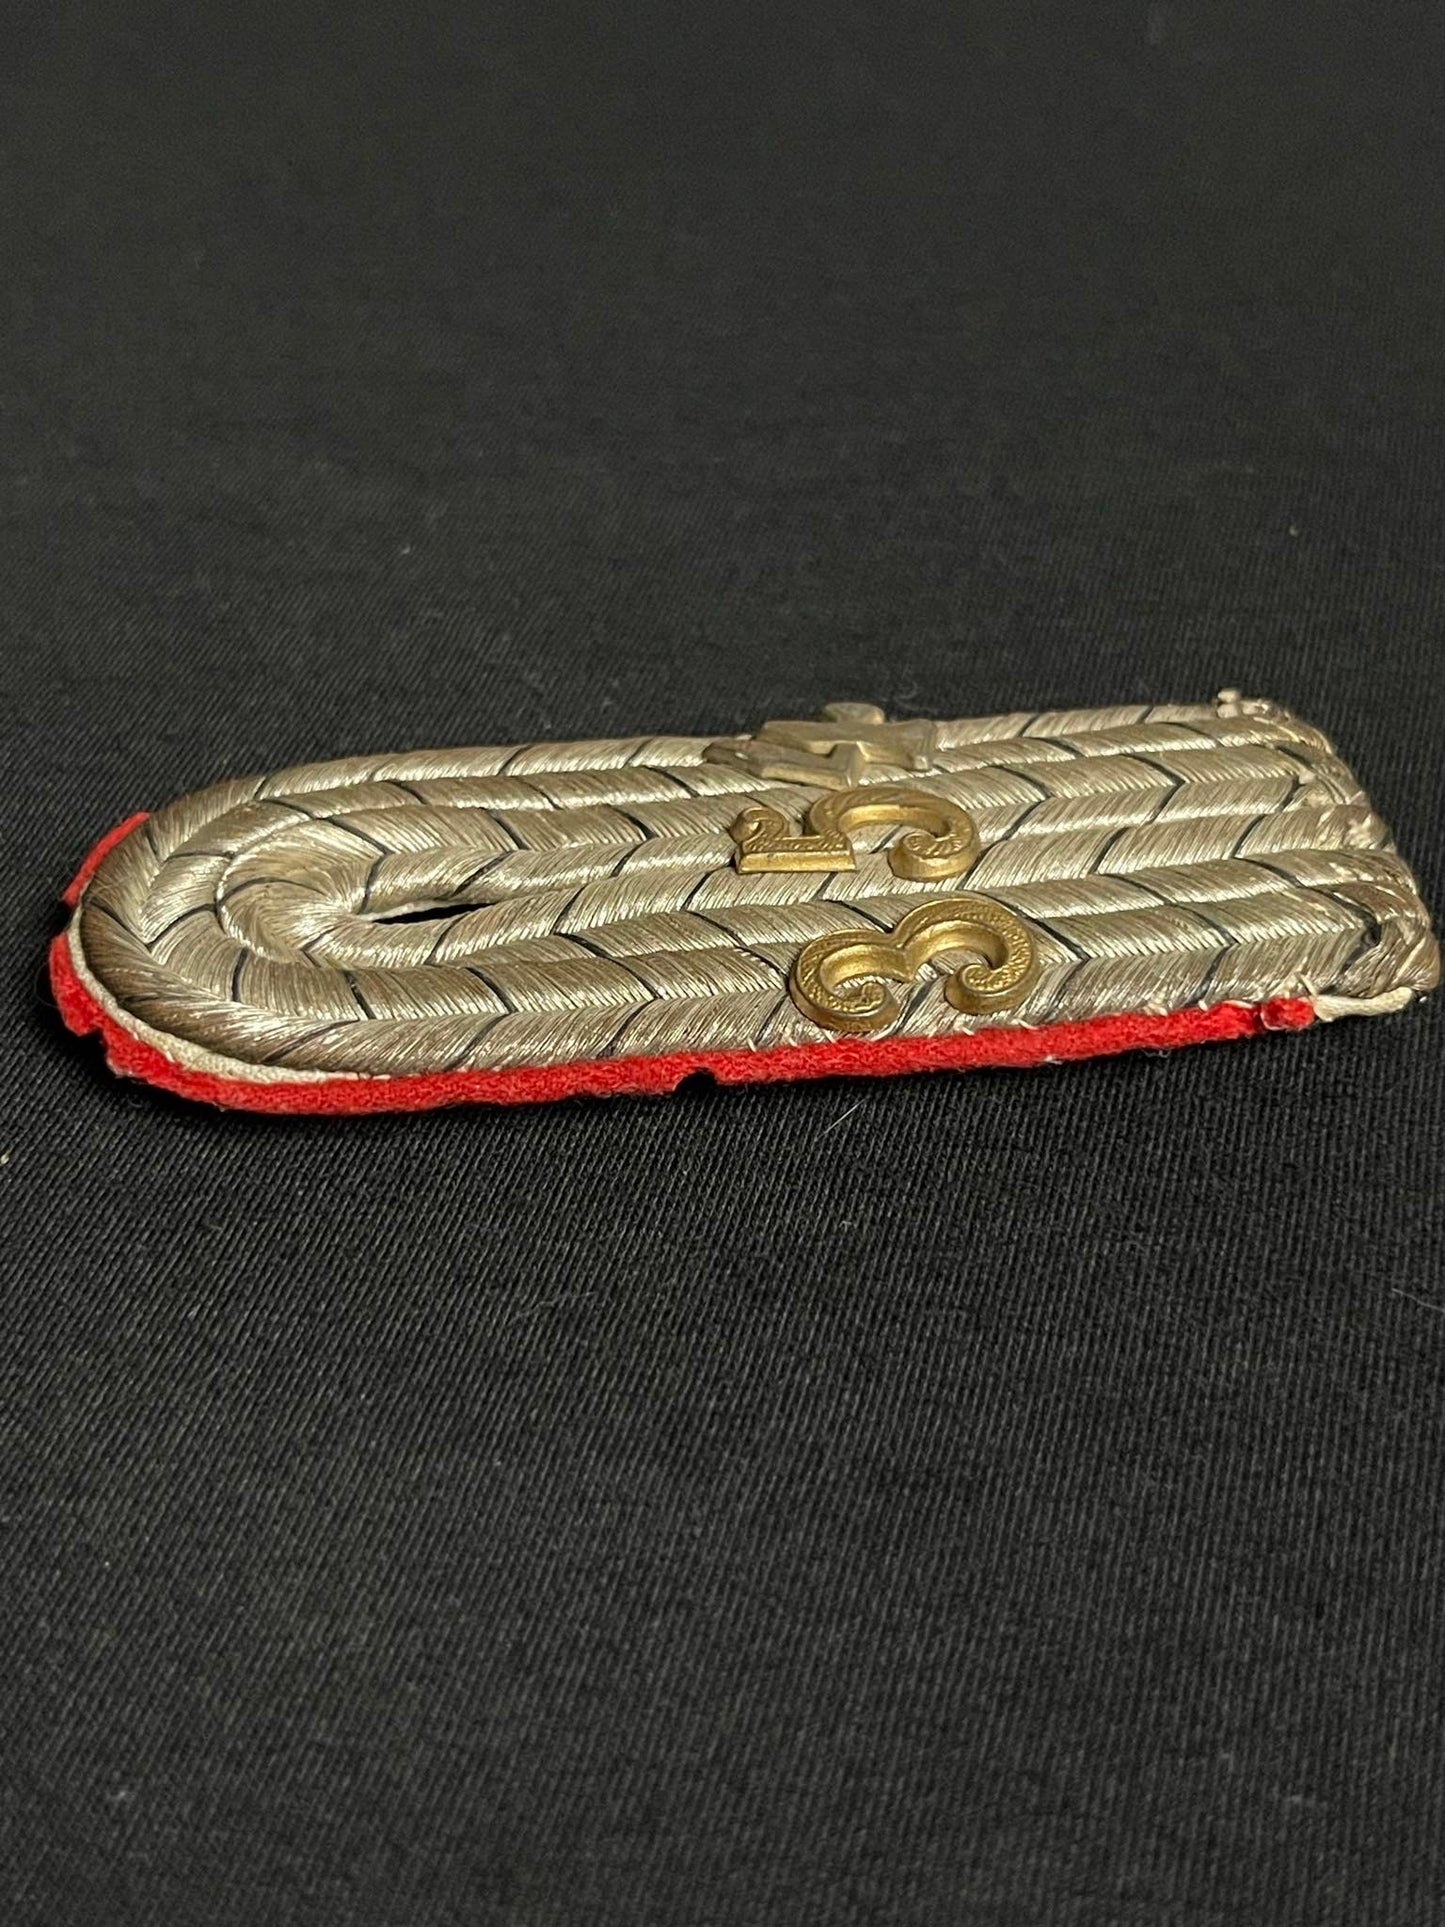 IMPERIAL GERMAN PRUSSIAN ARTILLERY 354TH REGIMENT SHOULDER BOARD RARE